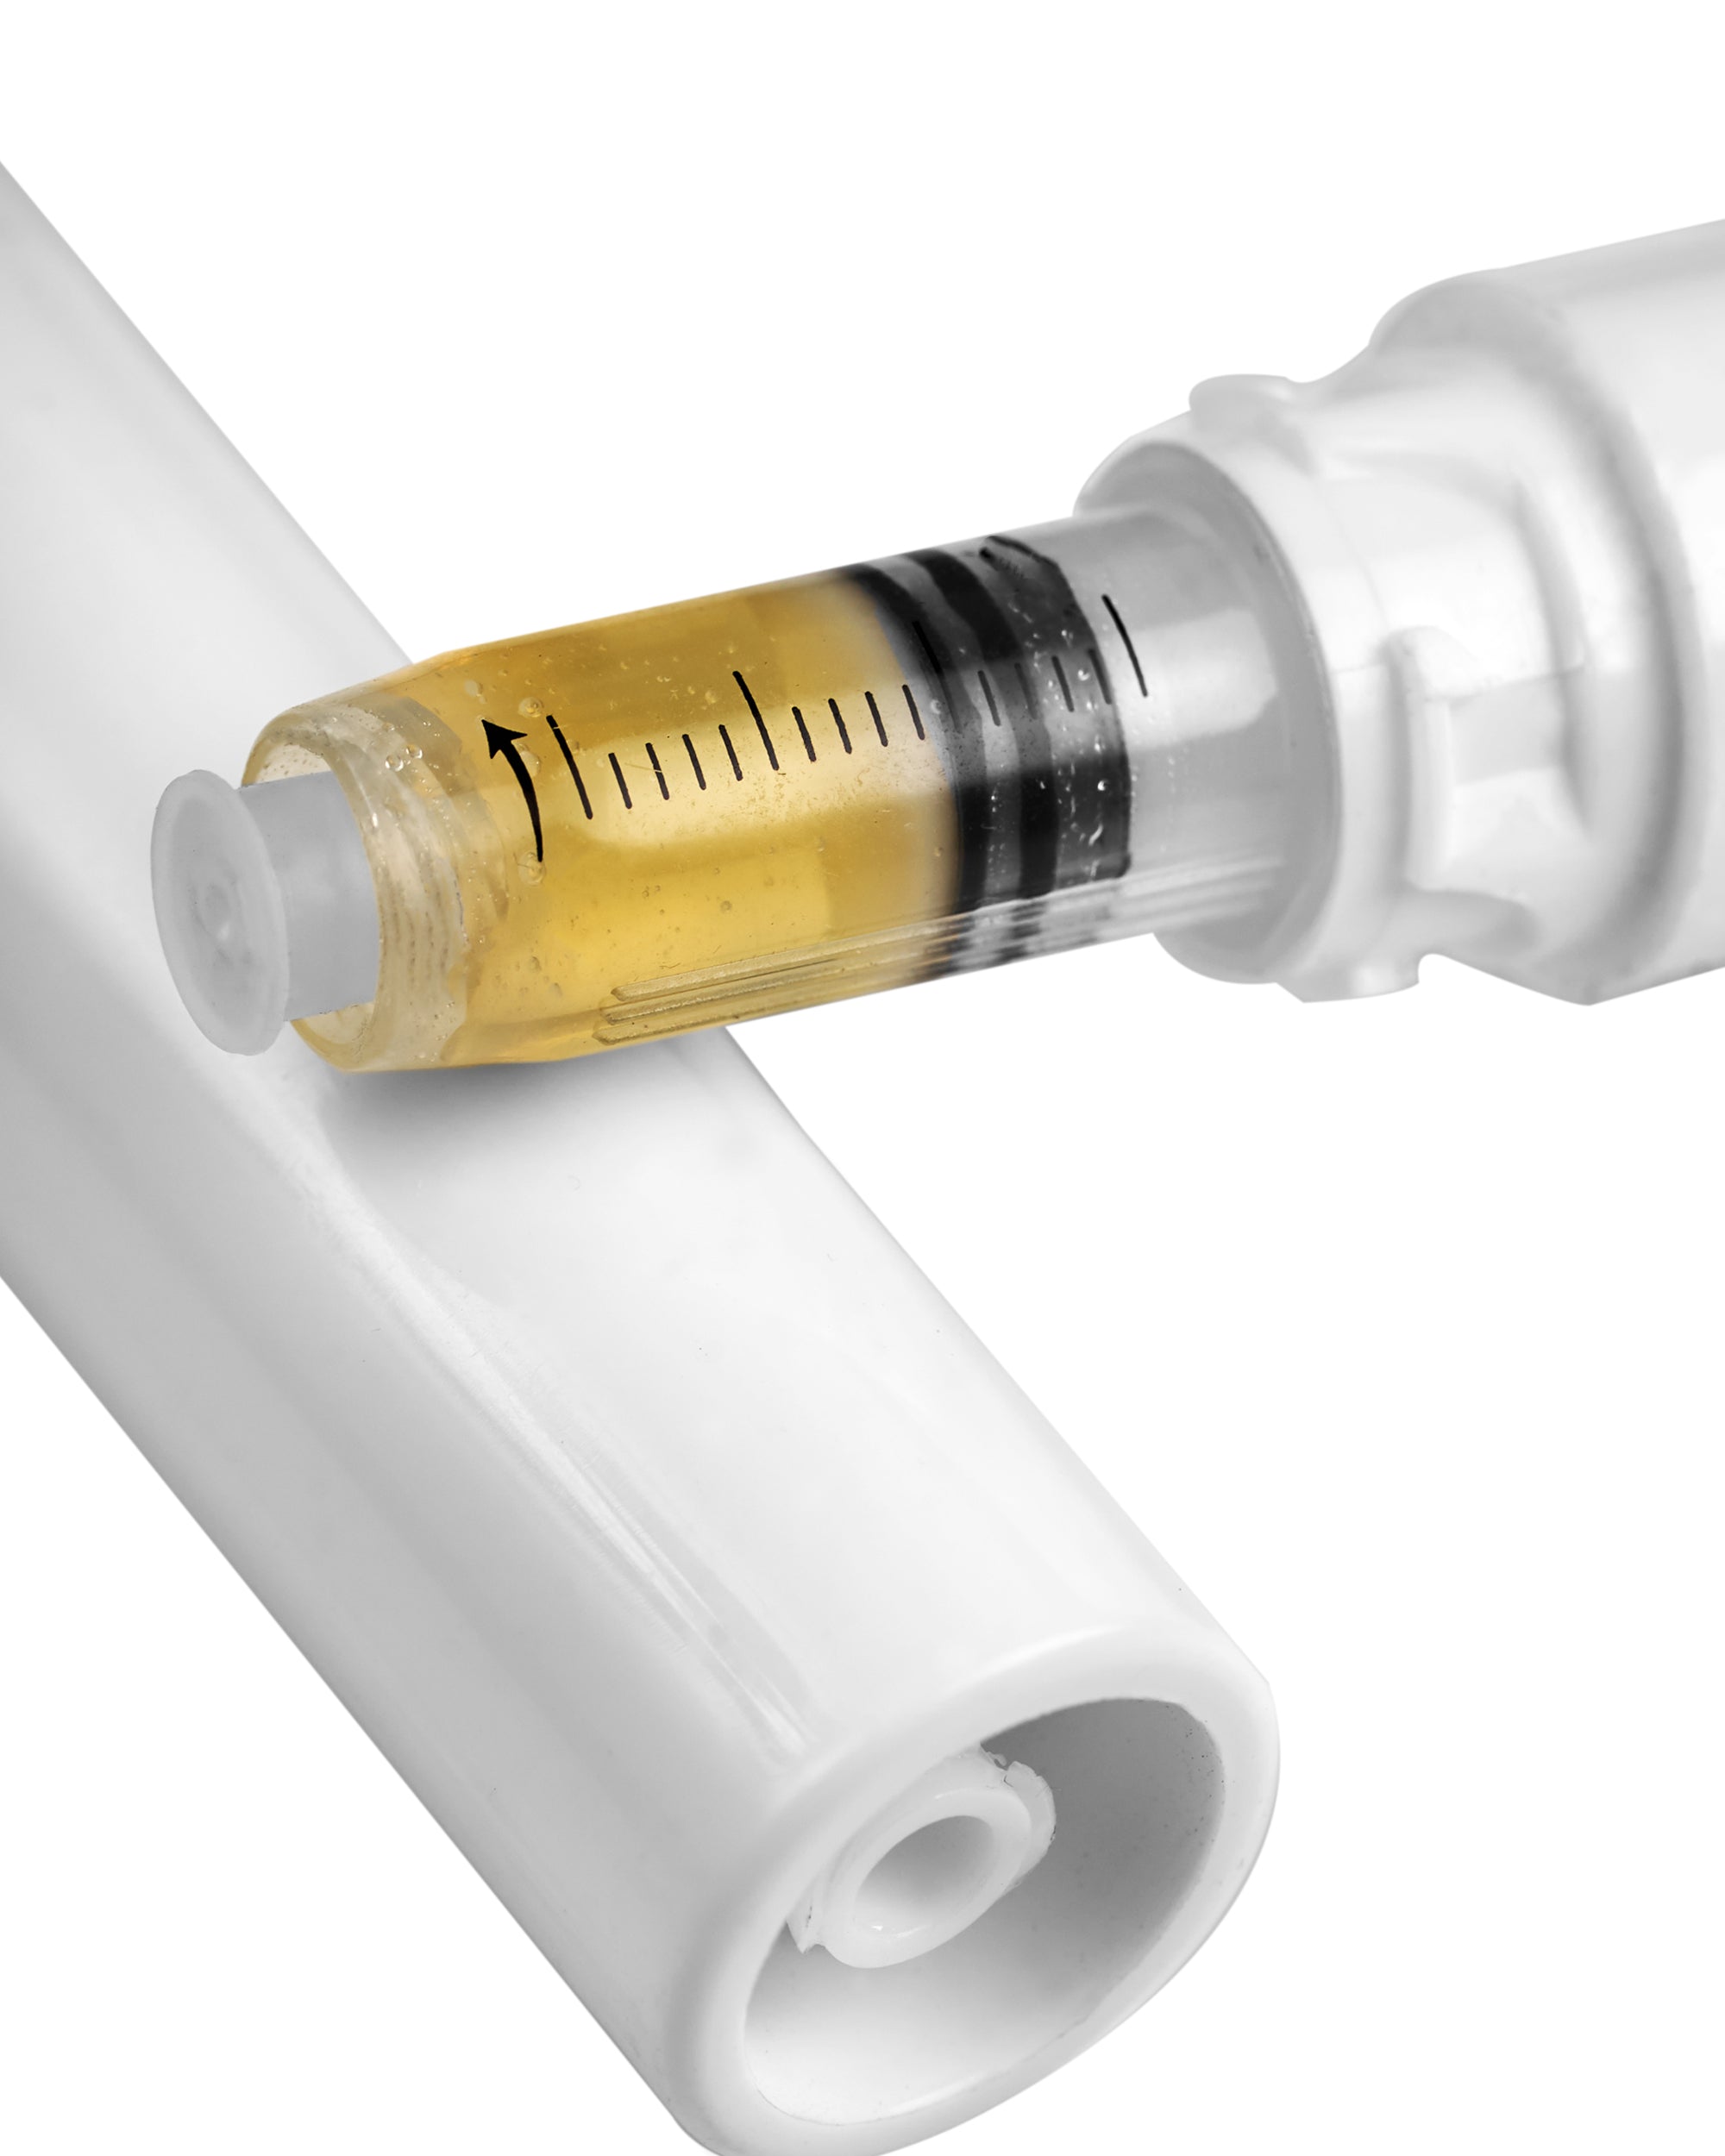 Child Resistant & Luer Lock | DymaPak Twistspenser White Plastic Dab Applicator Syringes | 1mL - 0.33mL Increments - 4